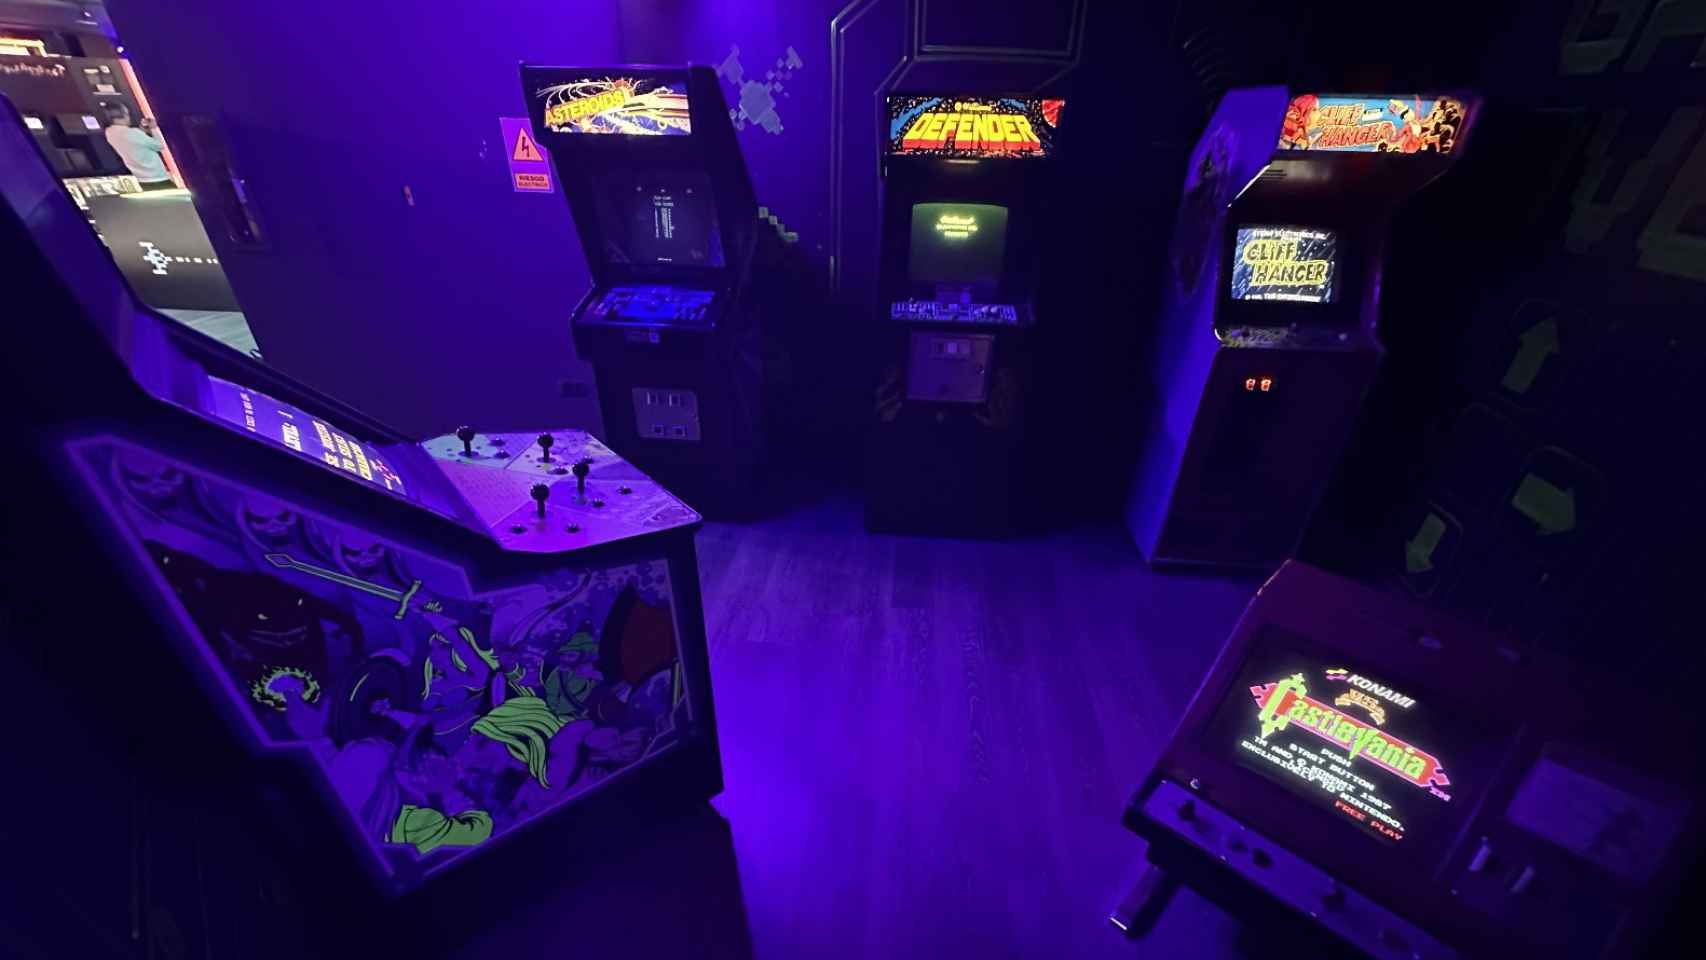 Sala de máquinas arcade.